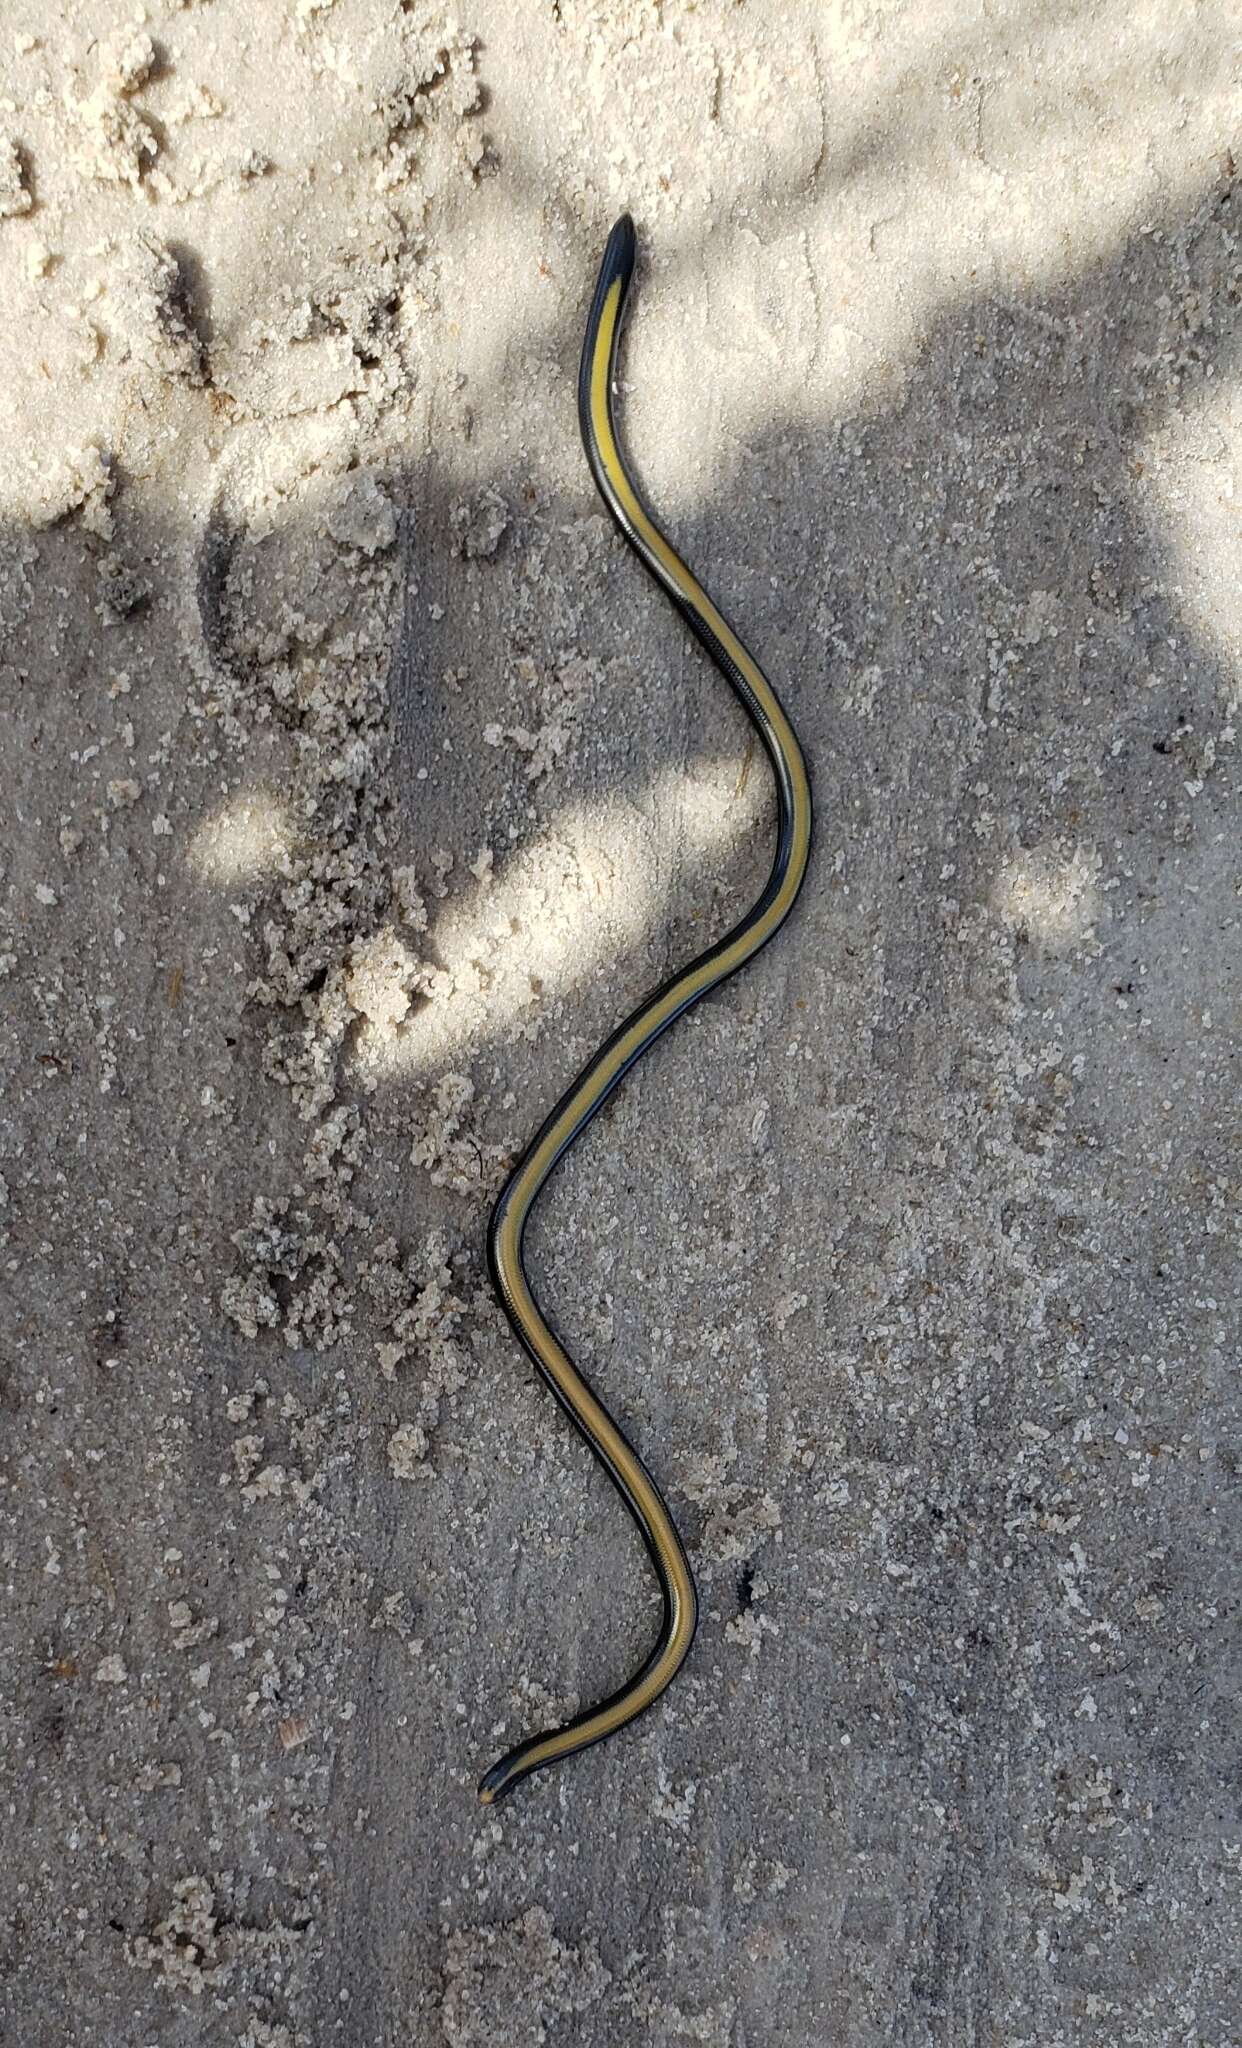 Image of Kenya Beaked Snake